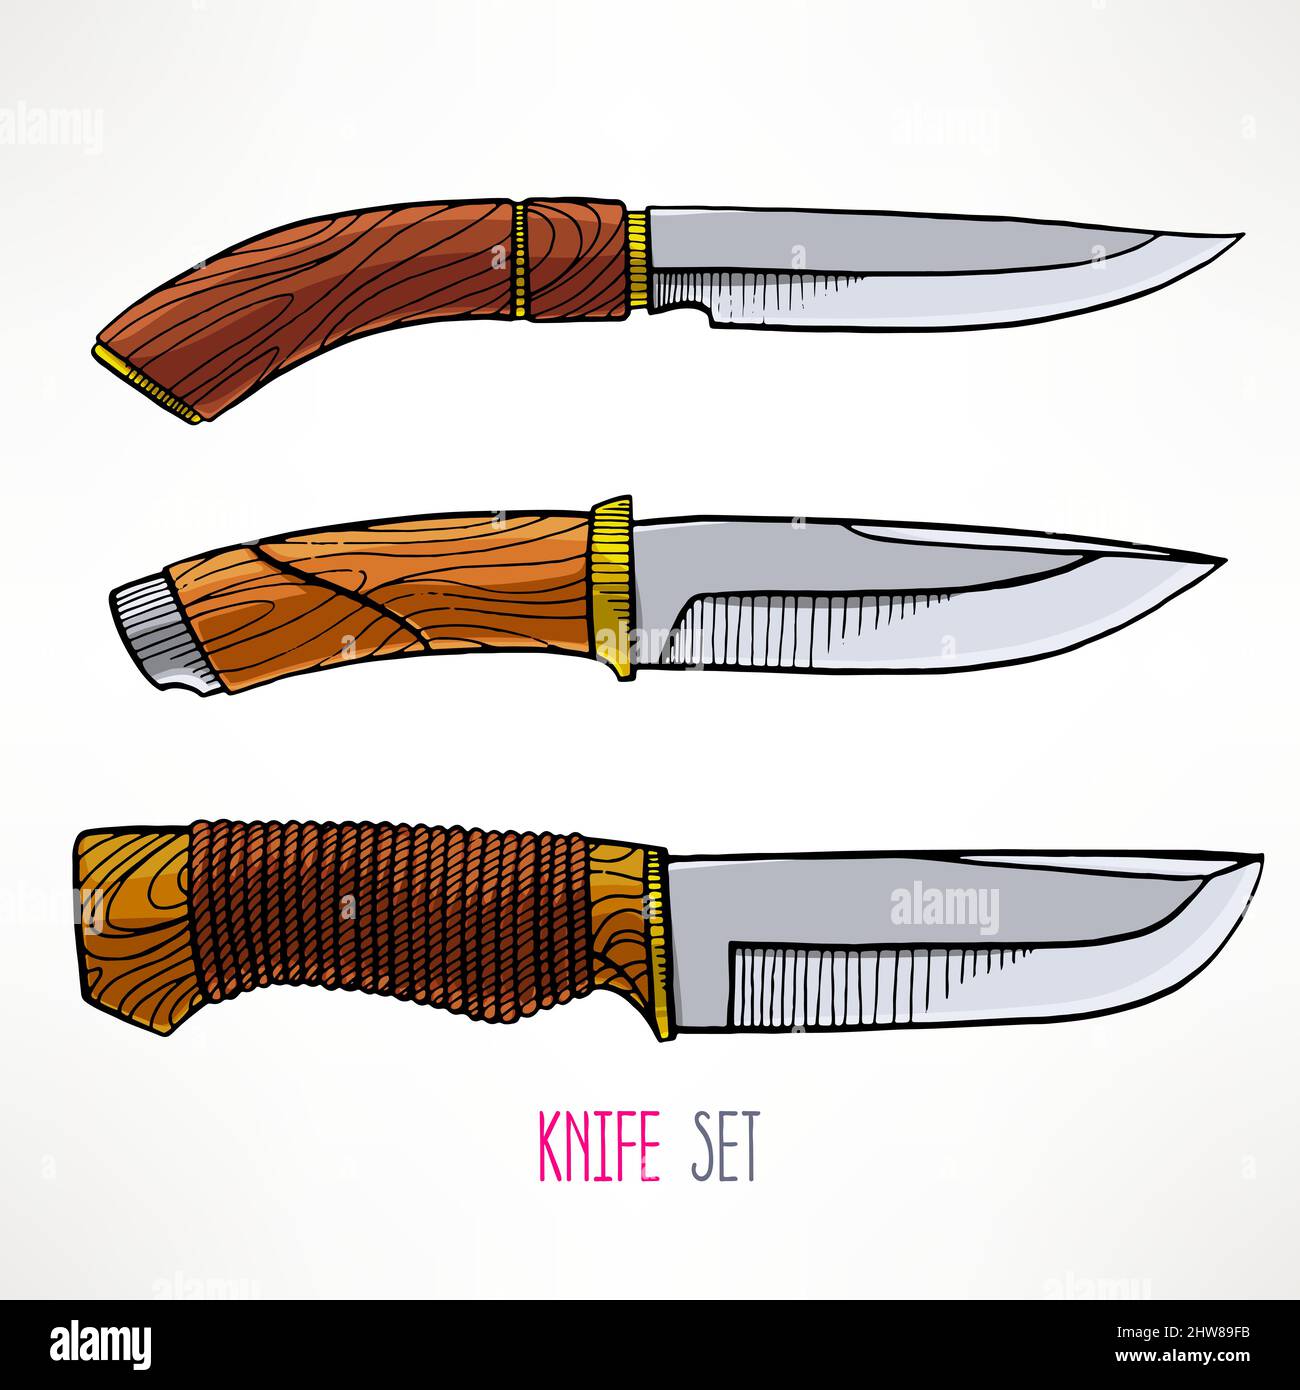 https://c8.alamy.com/comp/2HW89FB/set-with-three-hunting-knives-hand-drawn-illustration-2HW89FB.jpg